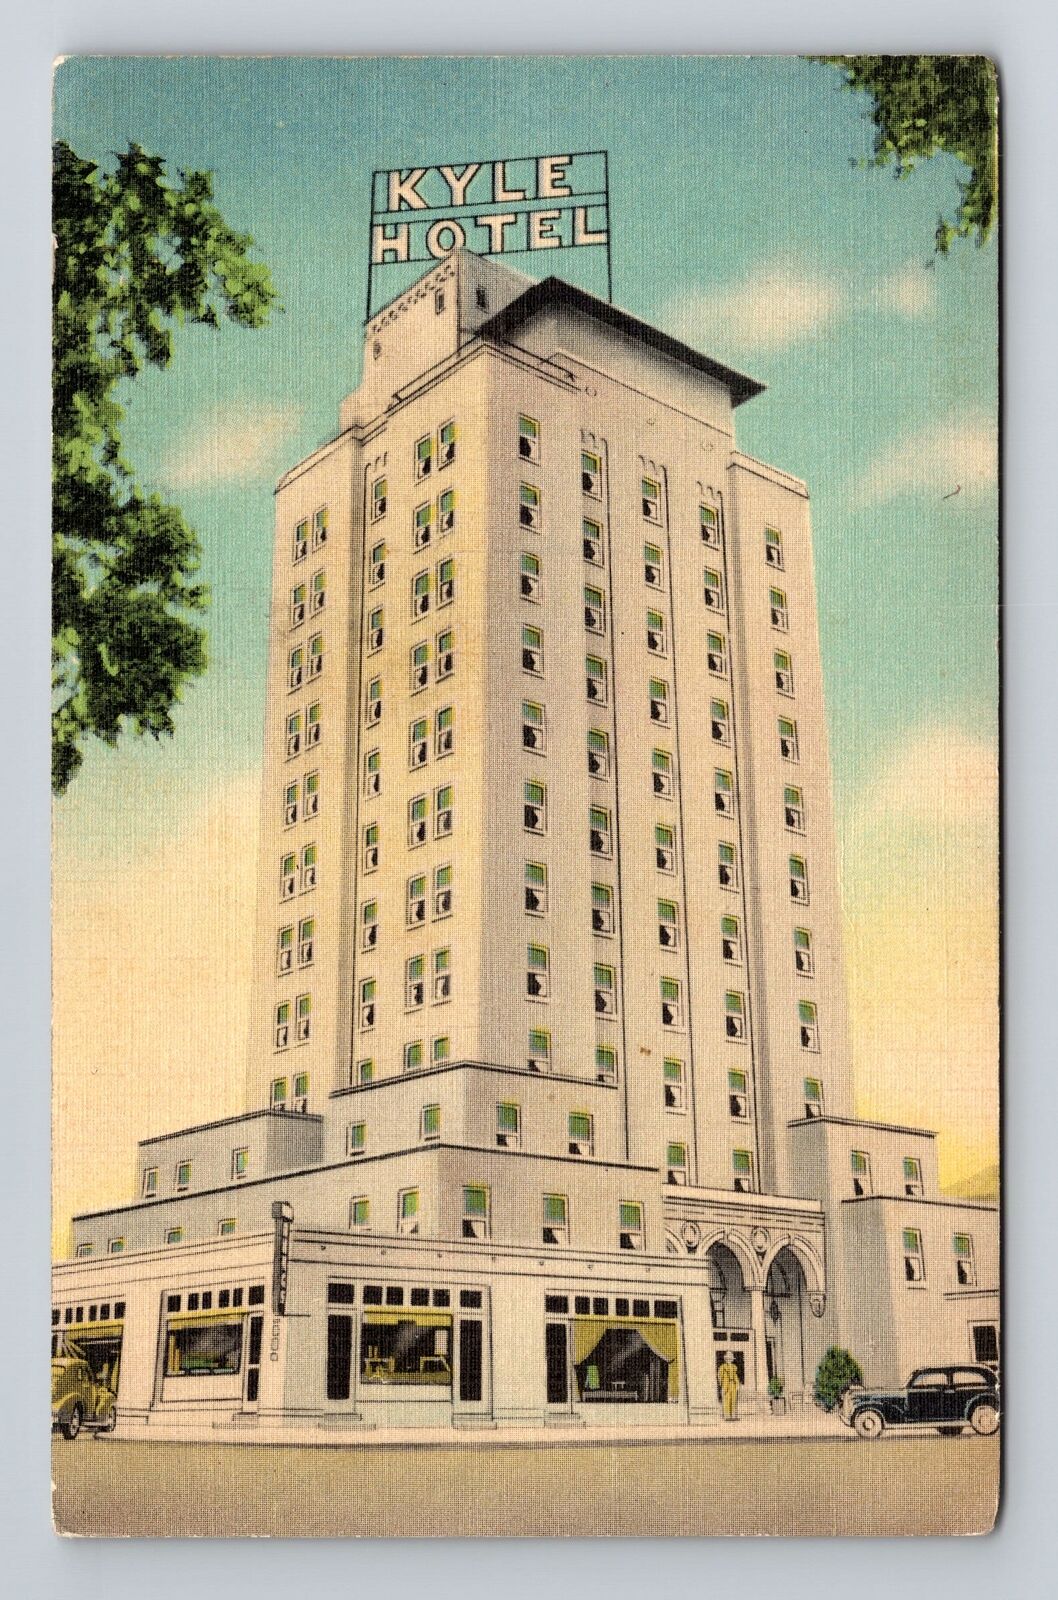 Temple TX-Texas, Kyle Hotel, Advertising, Antique Vintage Souvenir Postcard